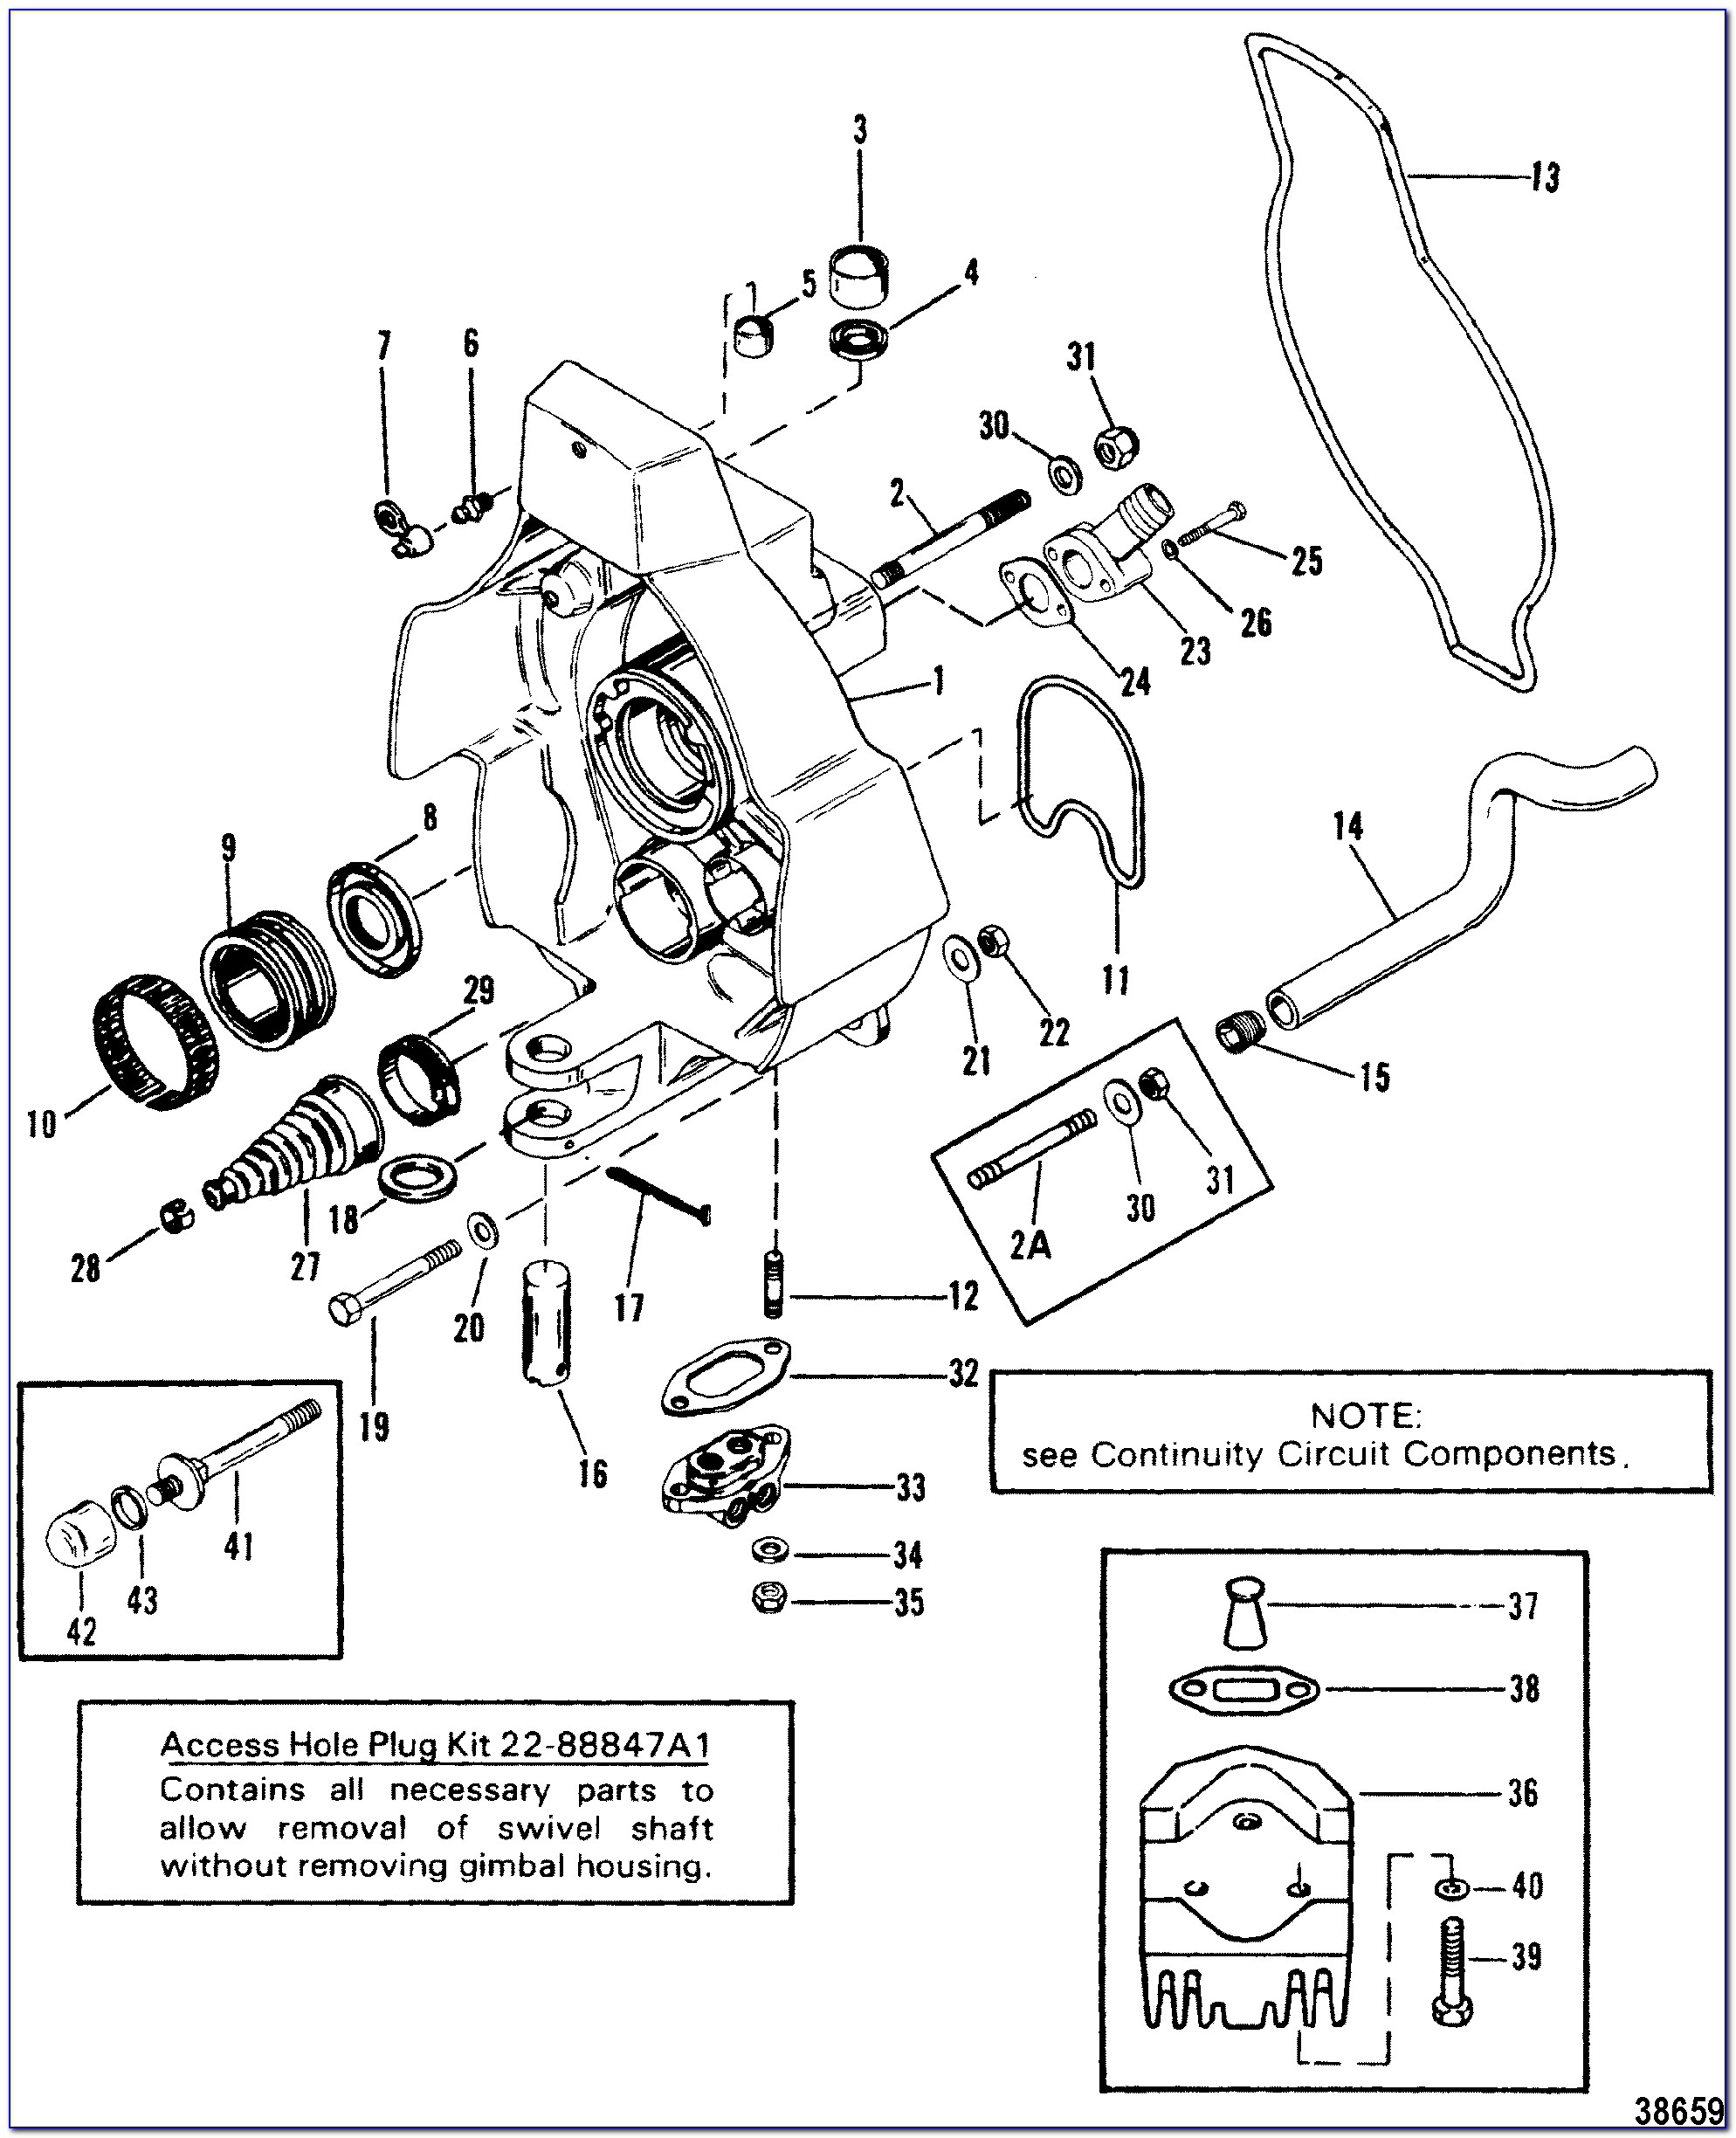 2003 Mercruiser Bravo 3 Outdrive Parts Diagram